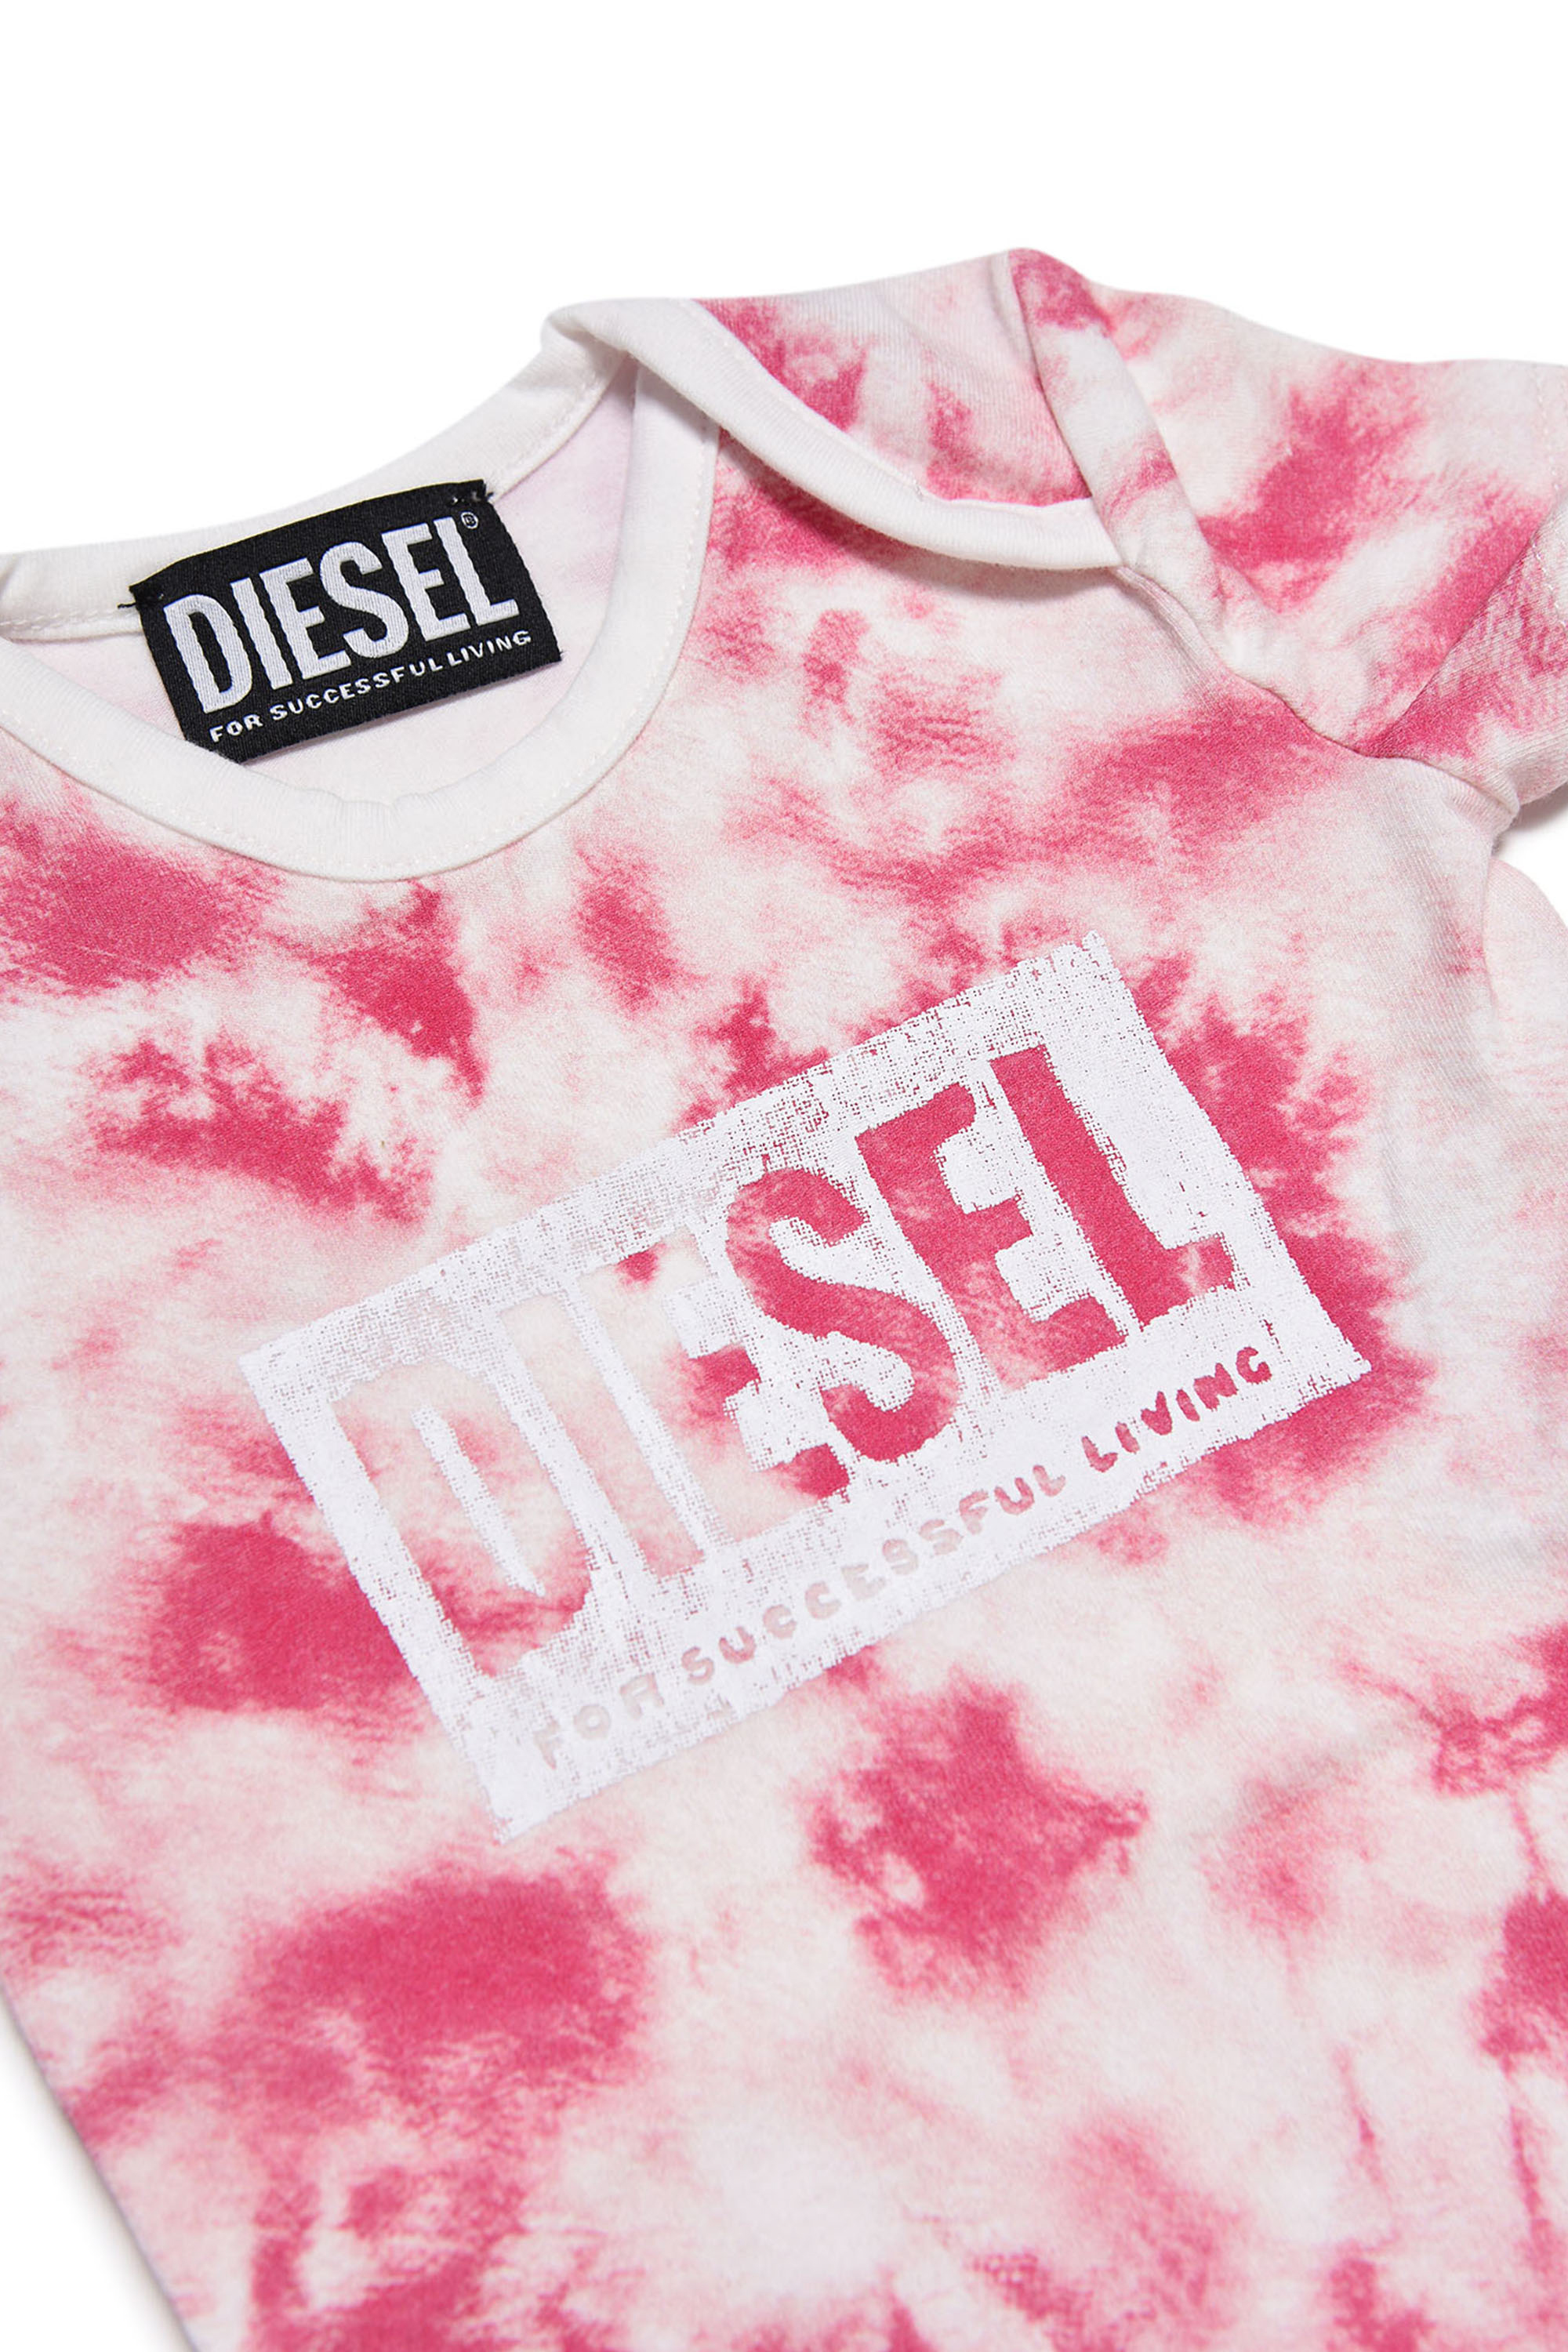 Diesel - UGY-NB, Weiss/Rosa - Image 3